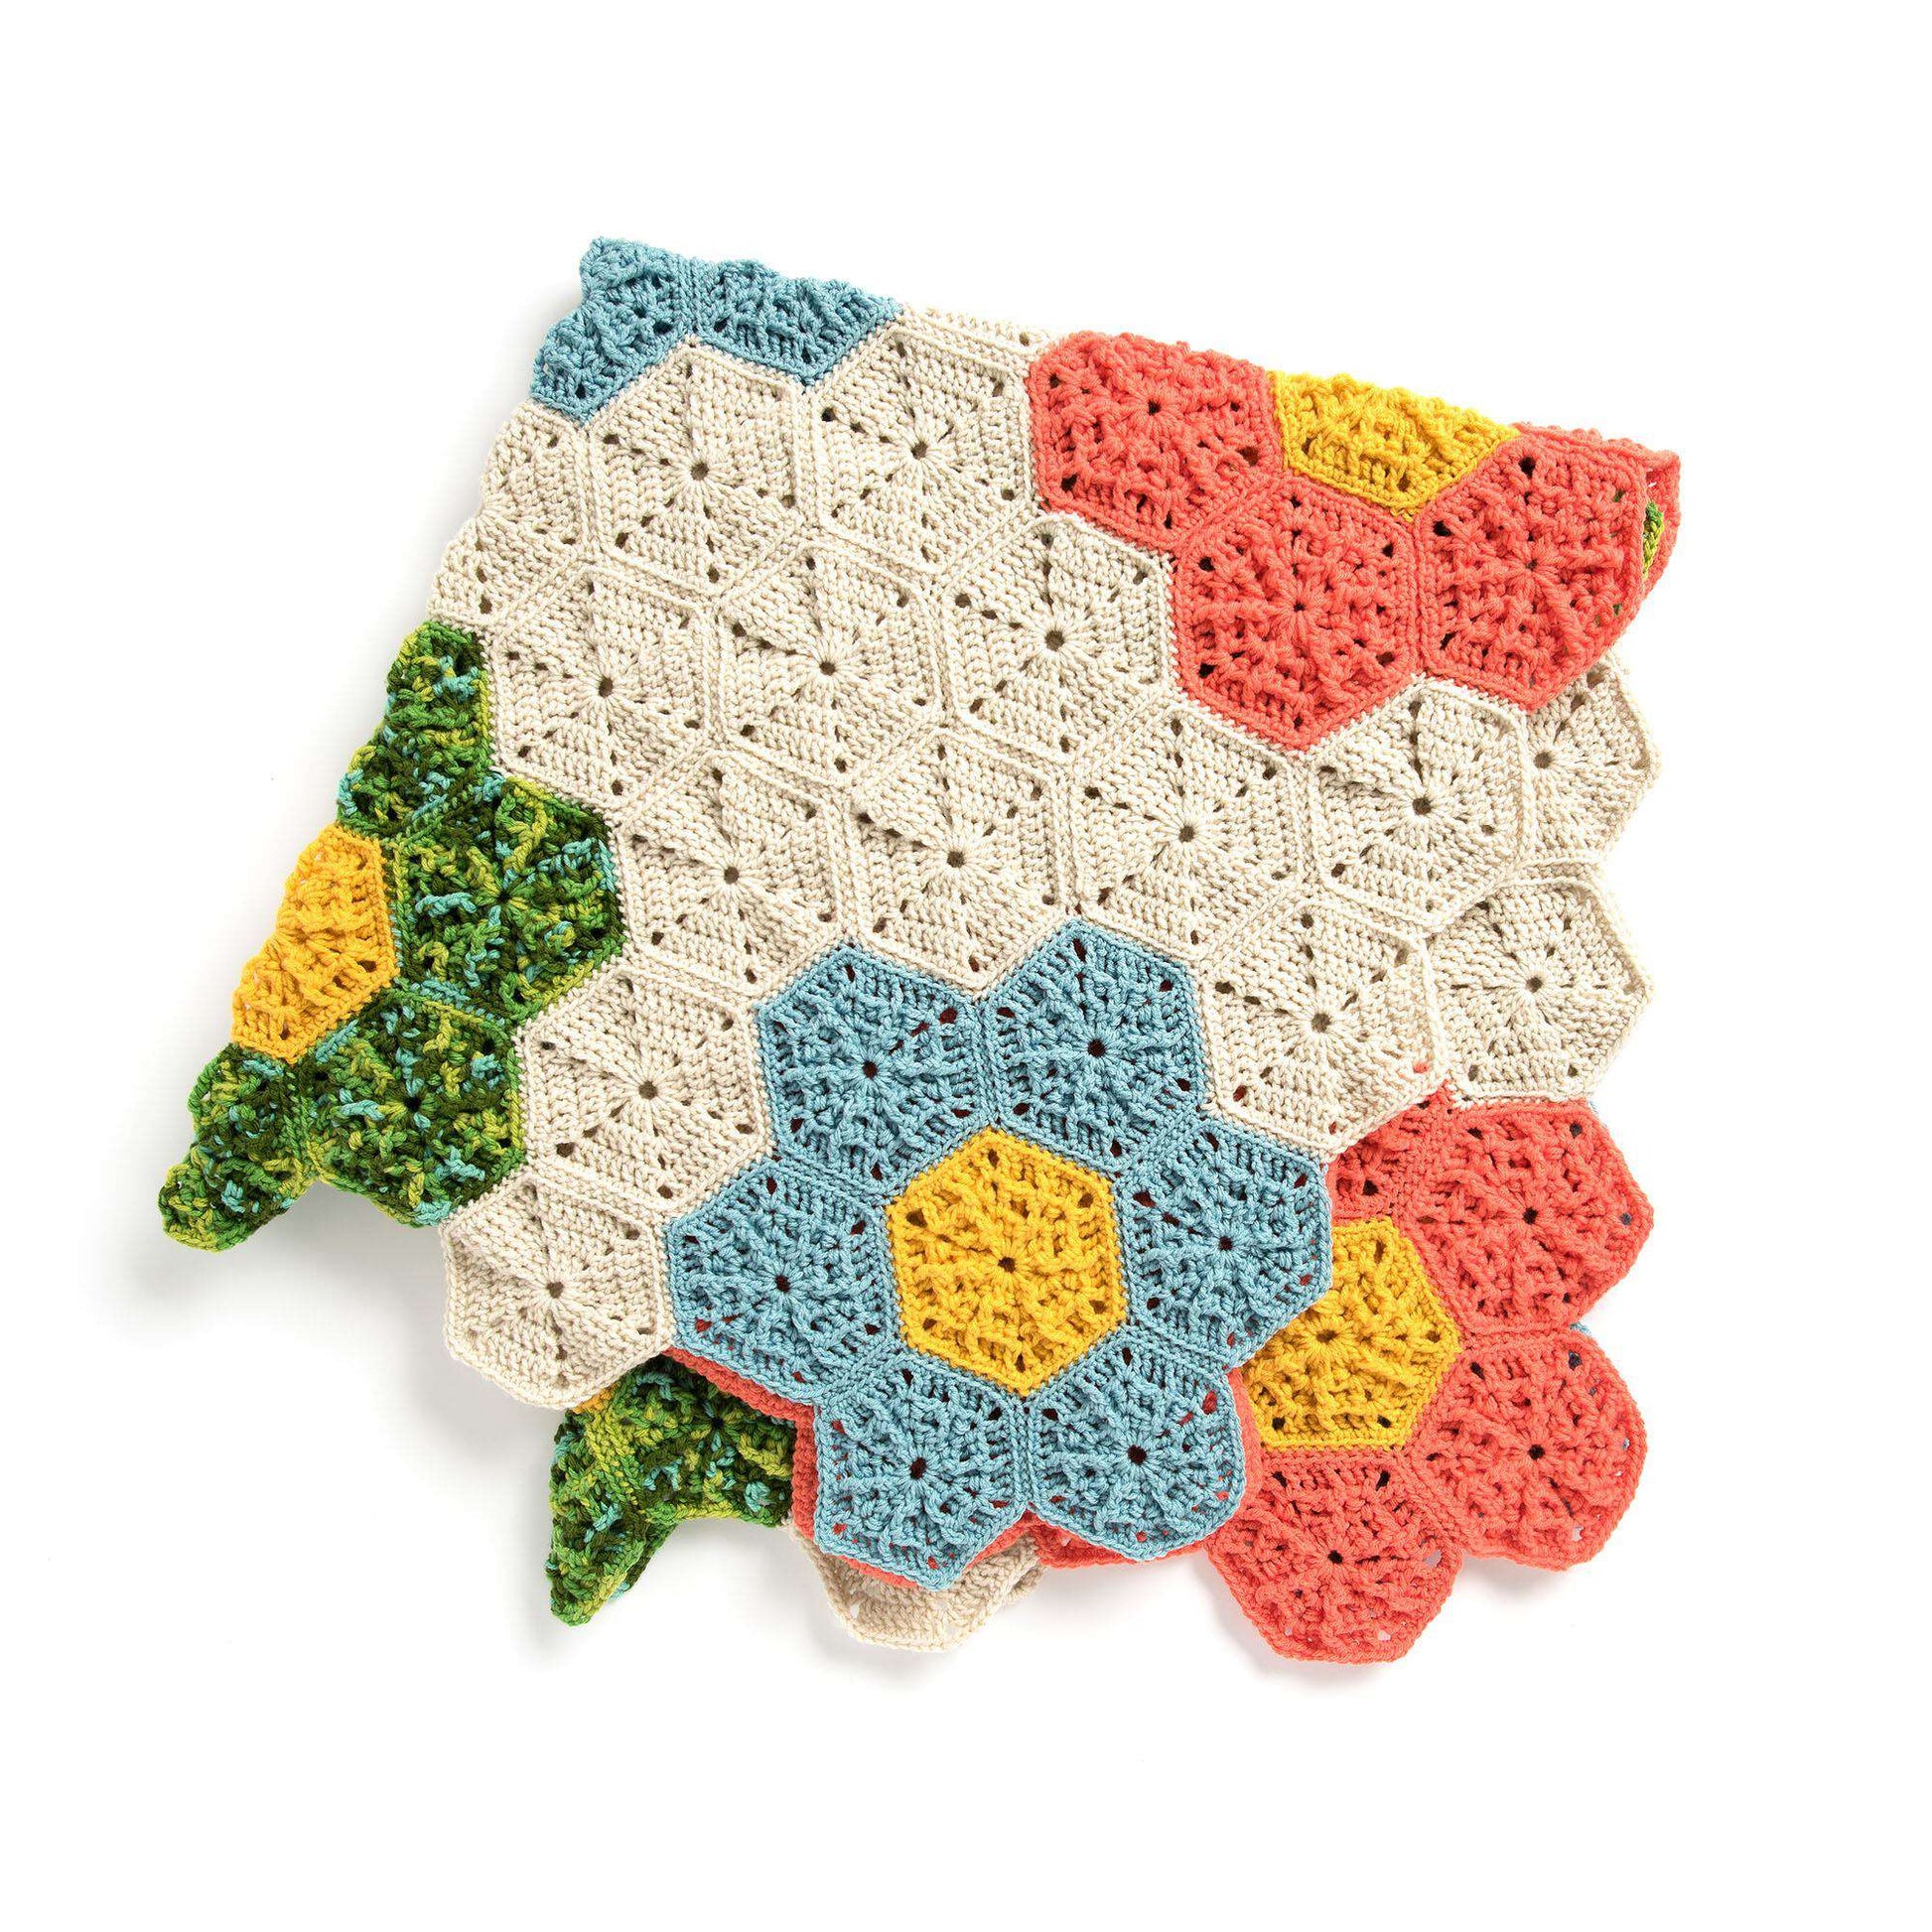 Caron Crochet Flower Patch Throw Single Size